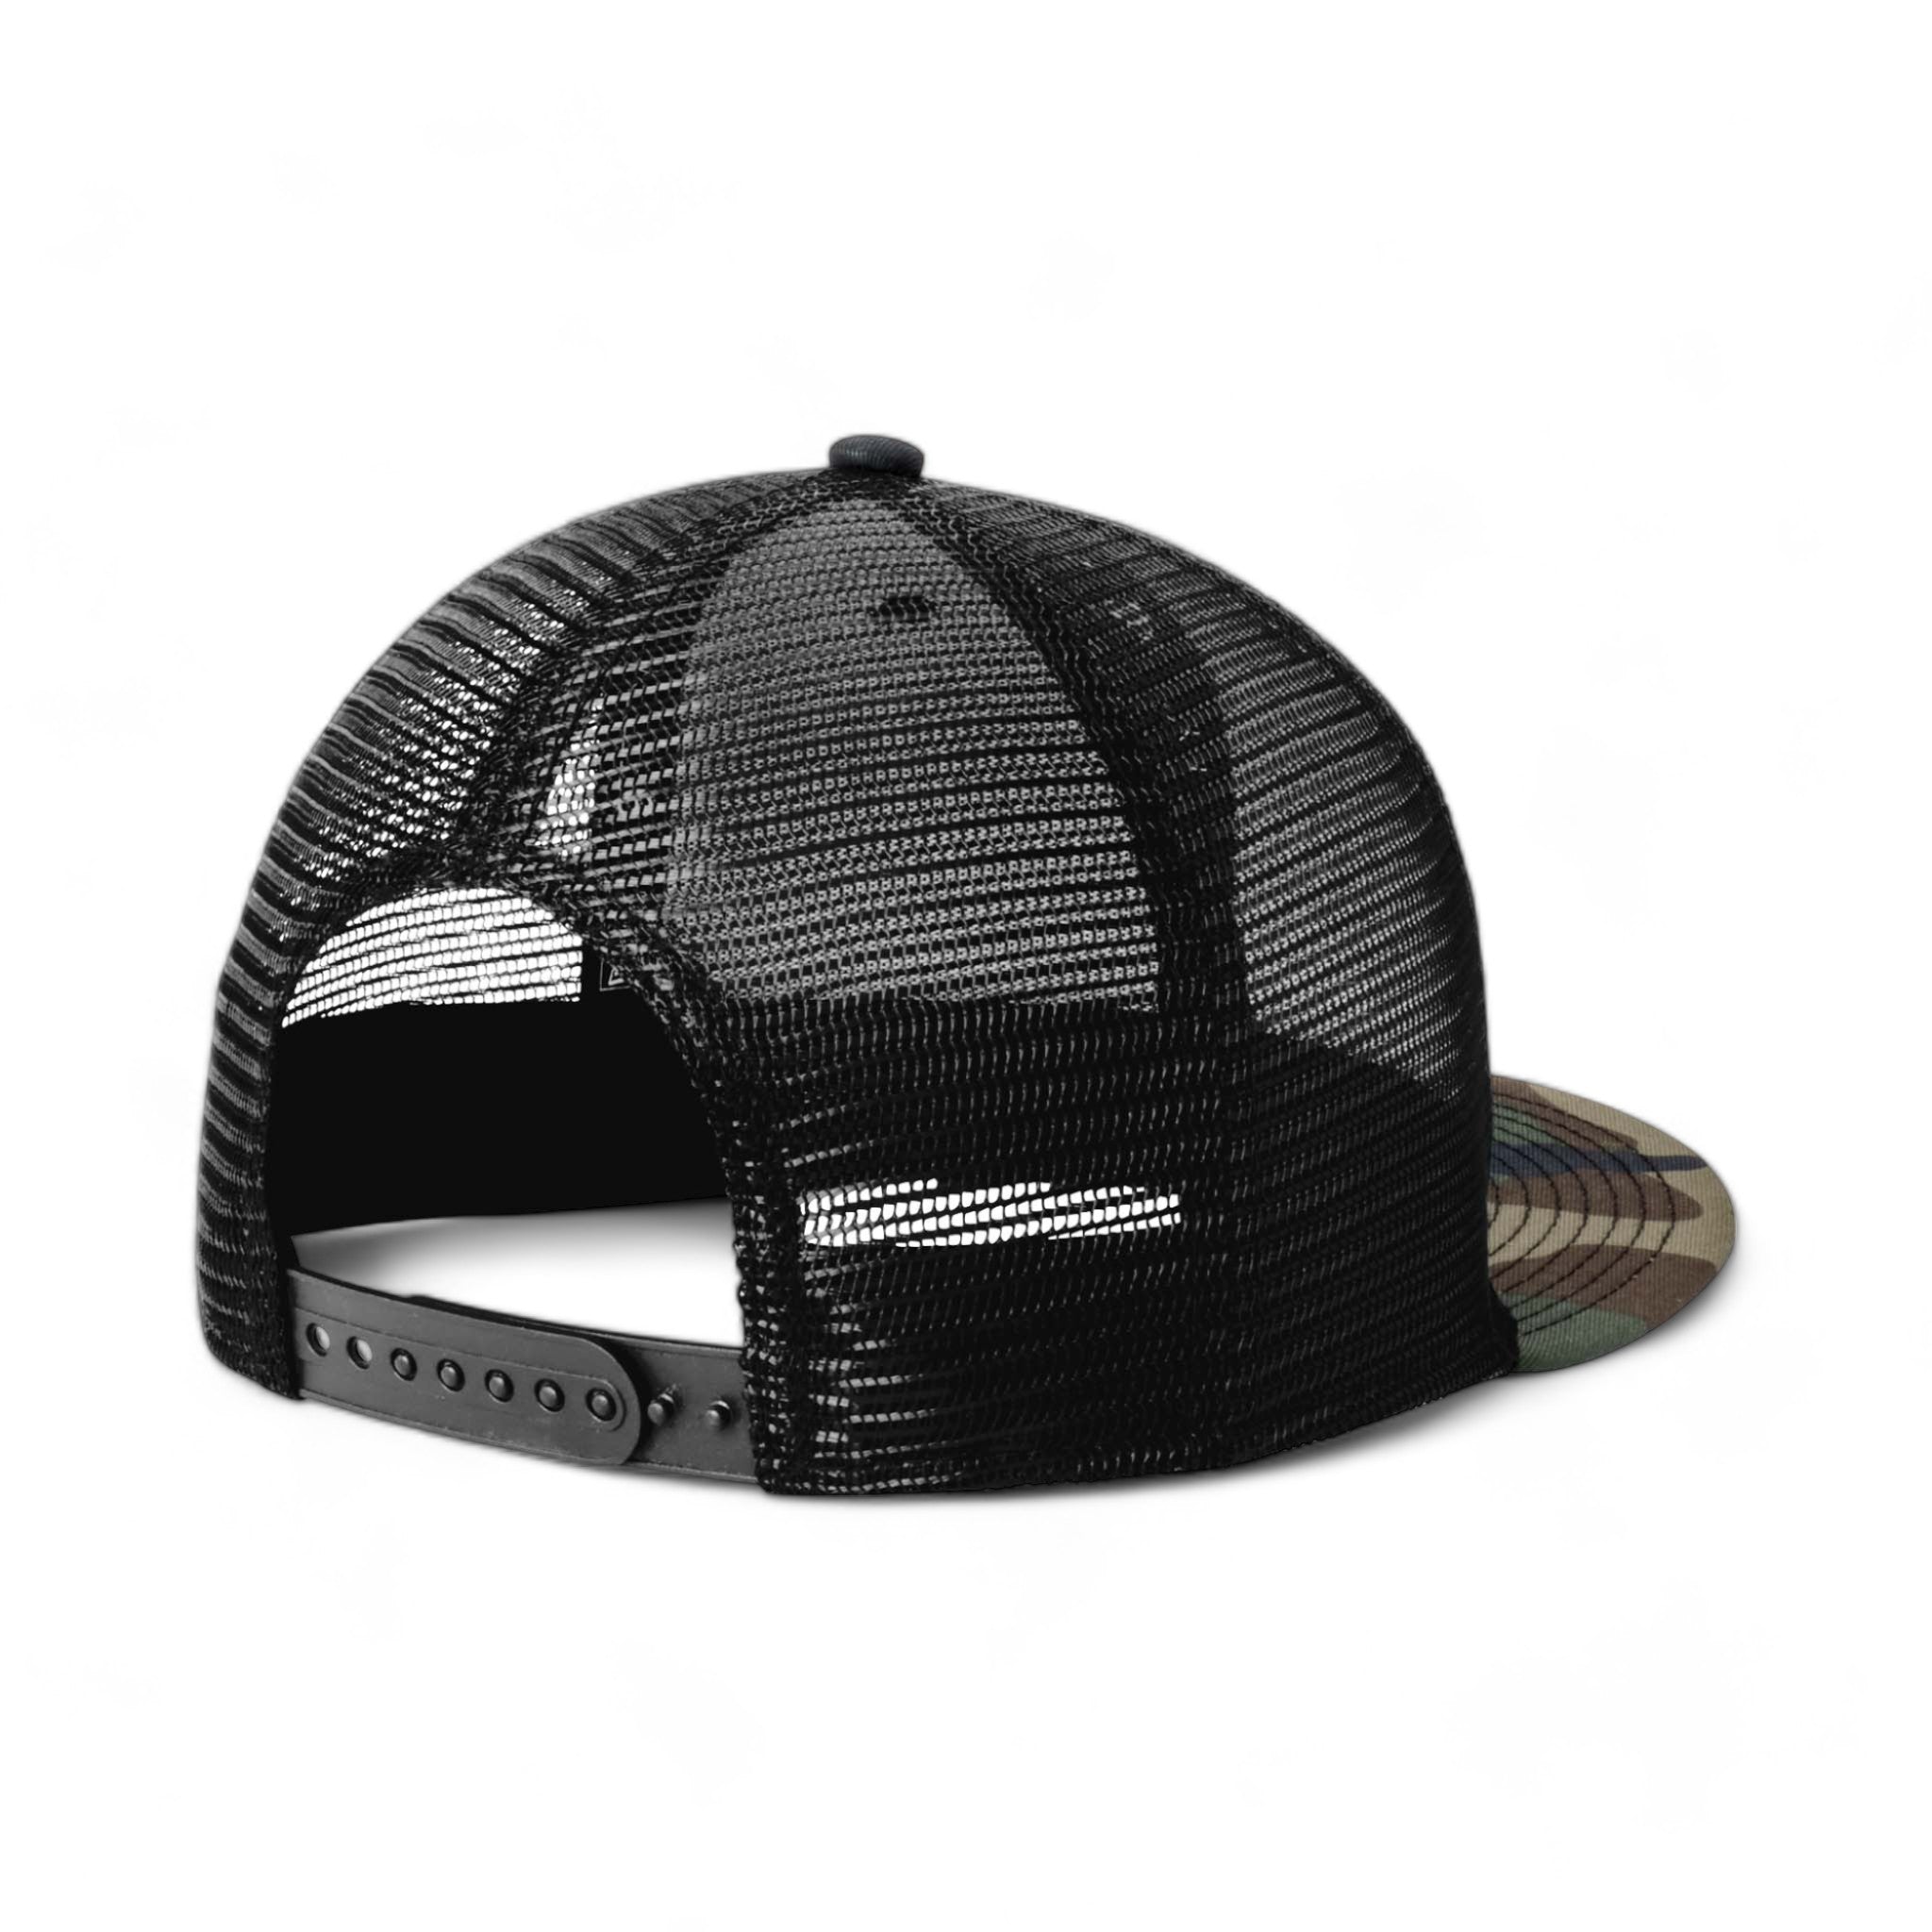 Back view of New Era NE4030 custom hat in camo and black